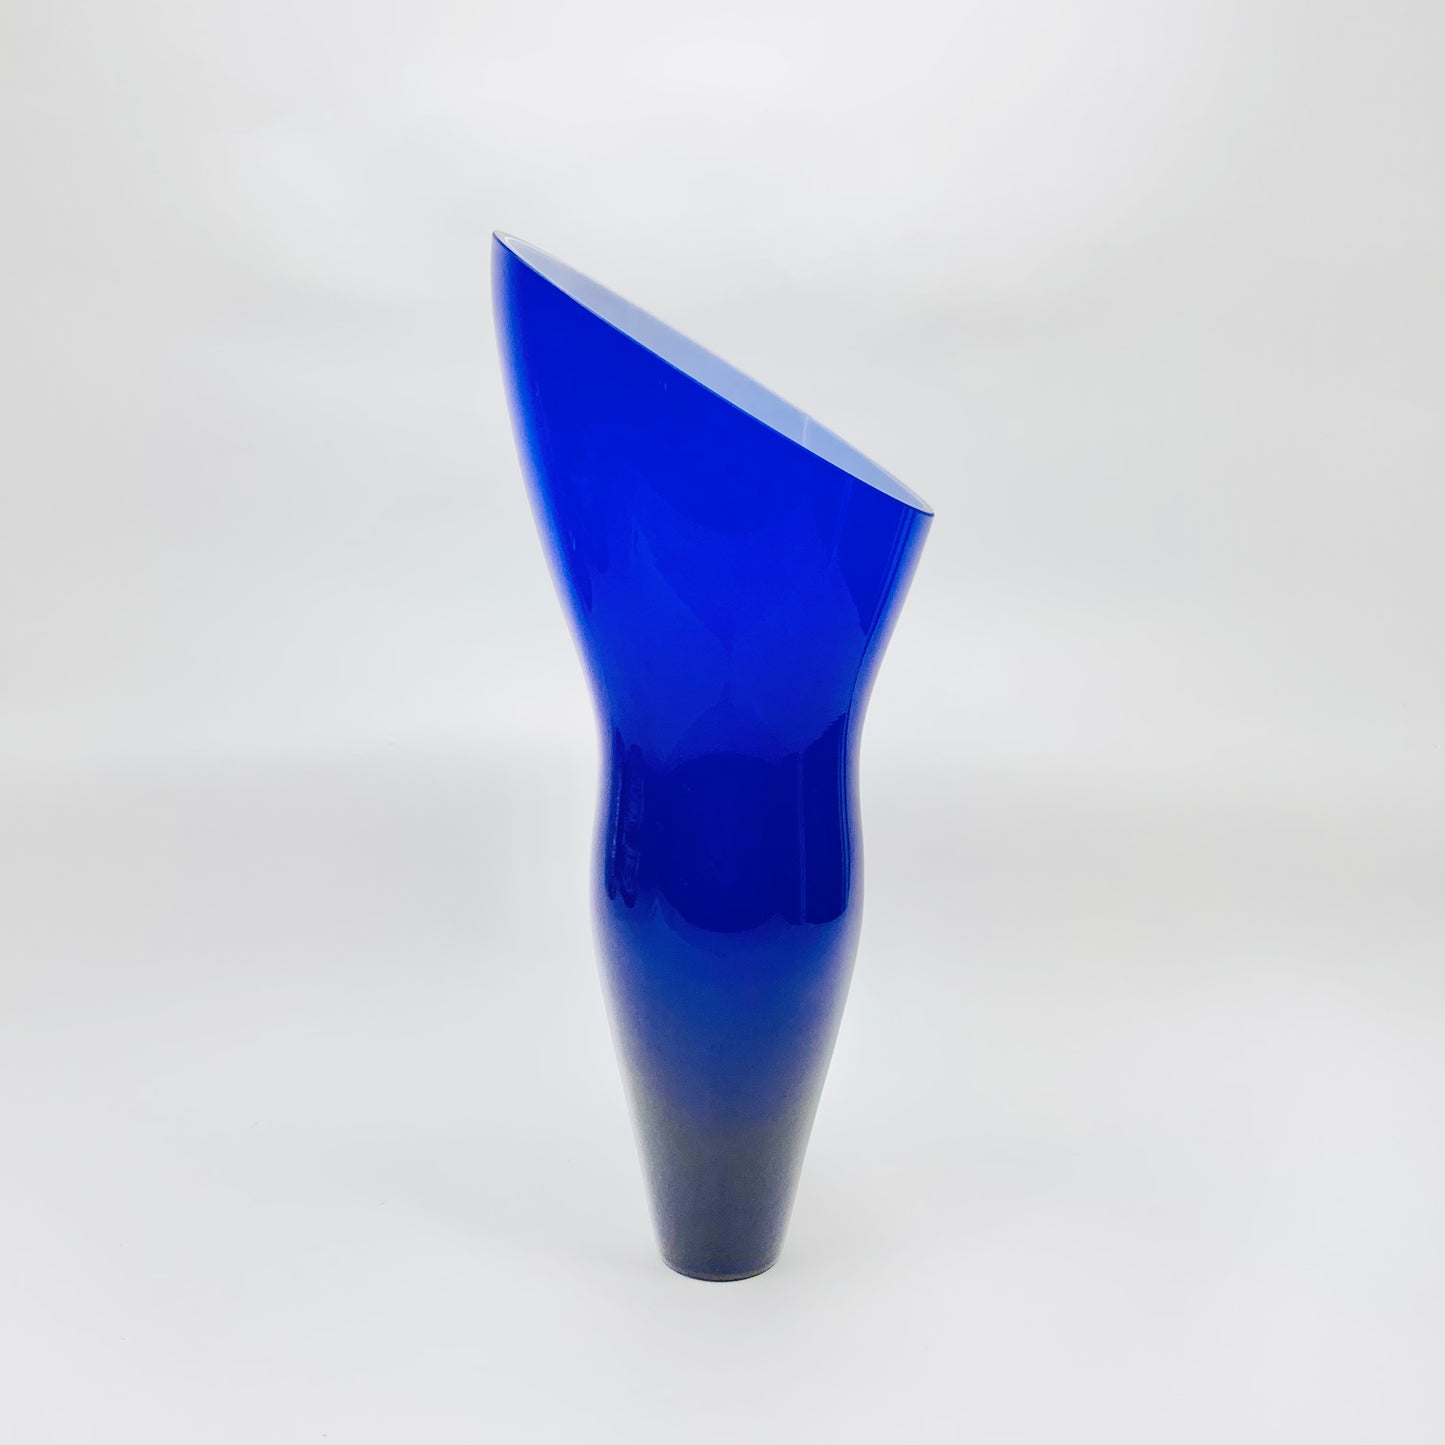 Space Age Swedish cased blue glass vase